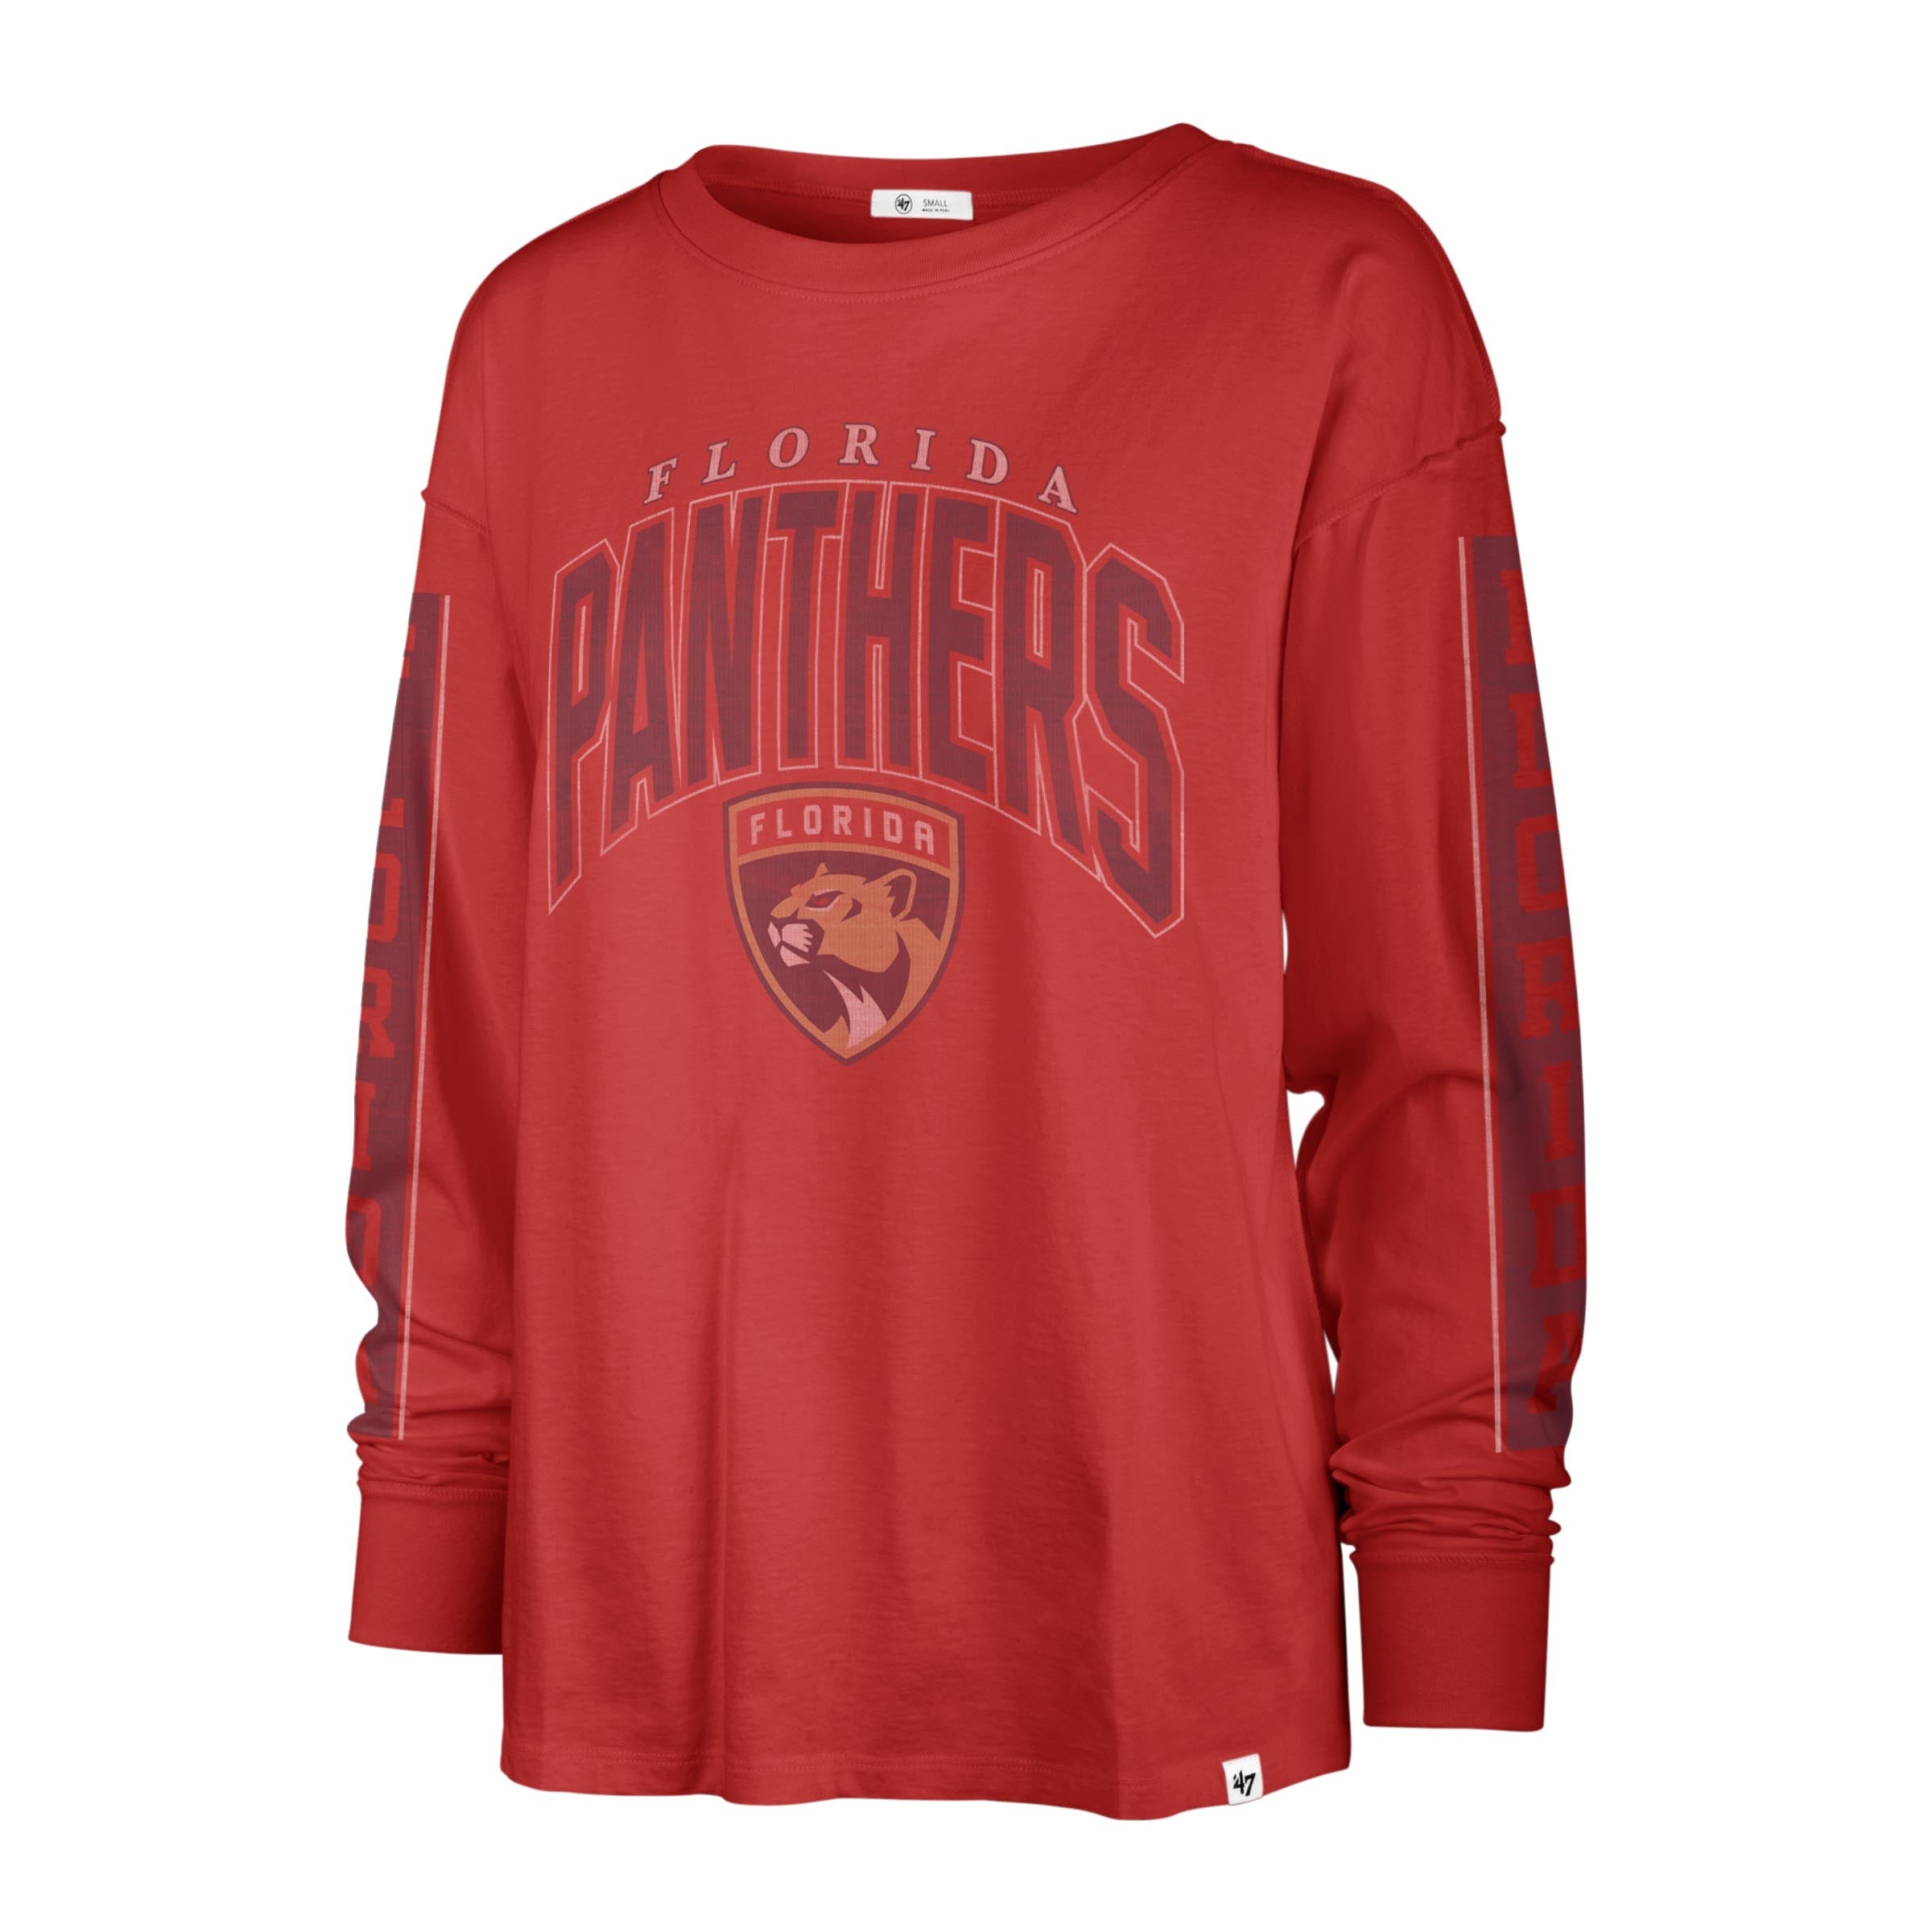 Florida Panthers 47 Brand Women's Racer Tomcat Long Sleeve T-Shirt - Red